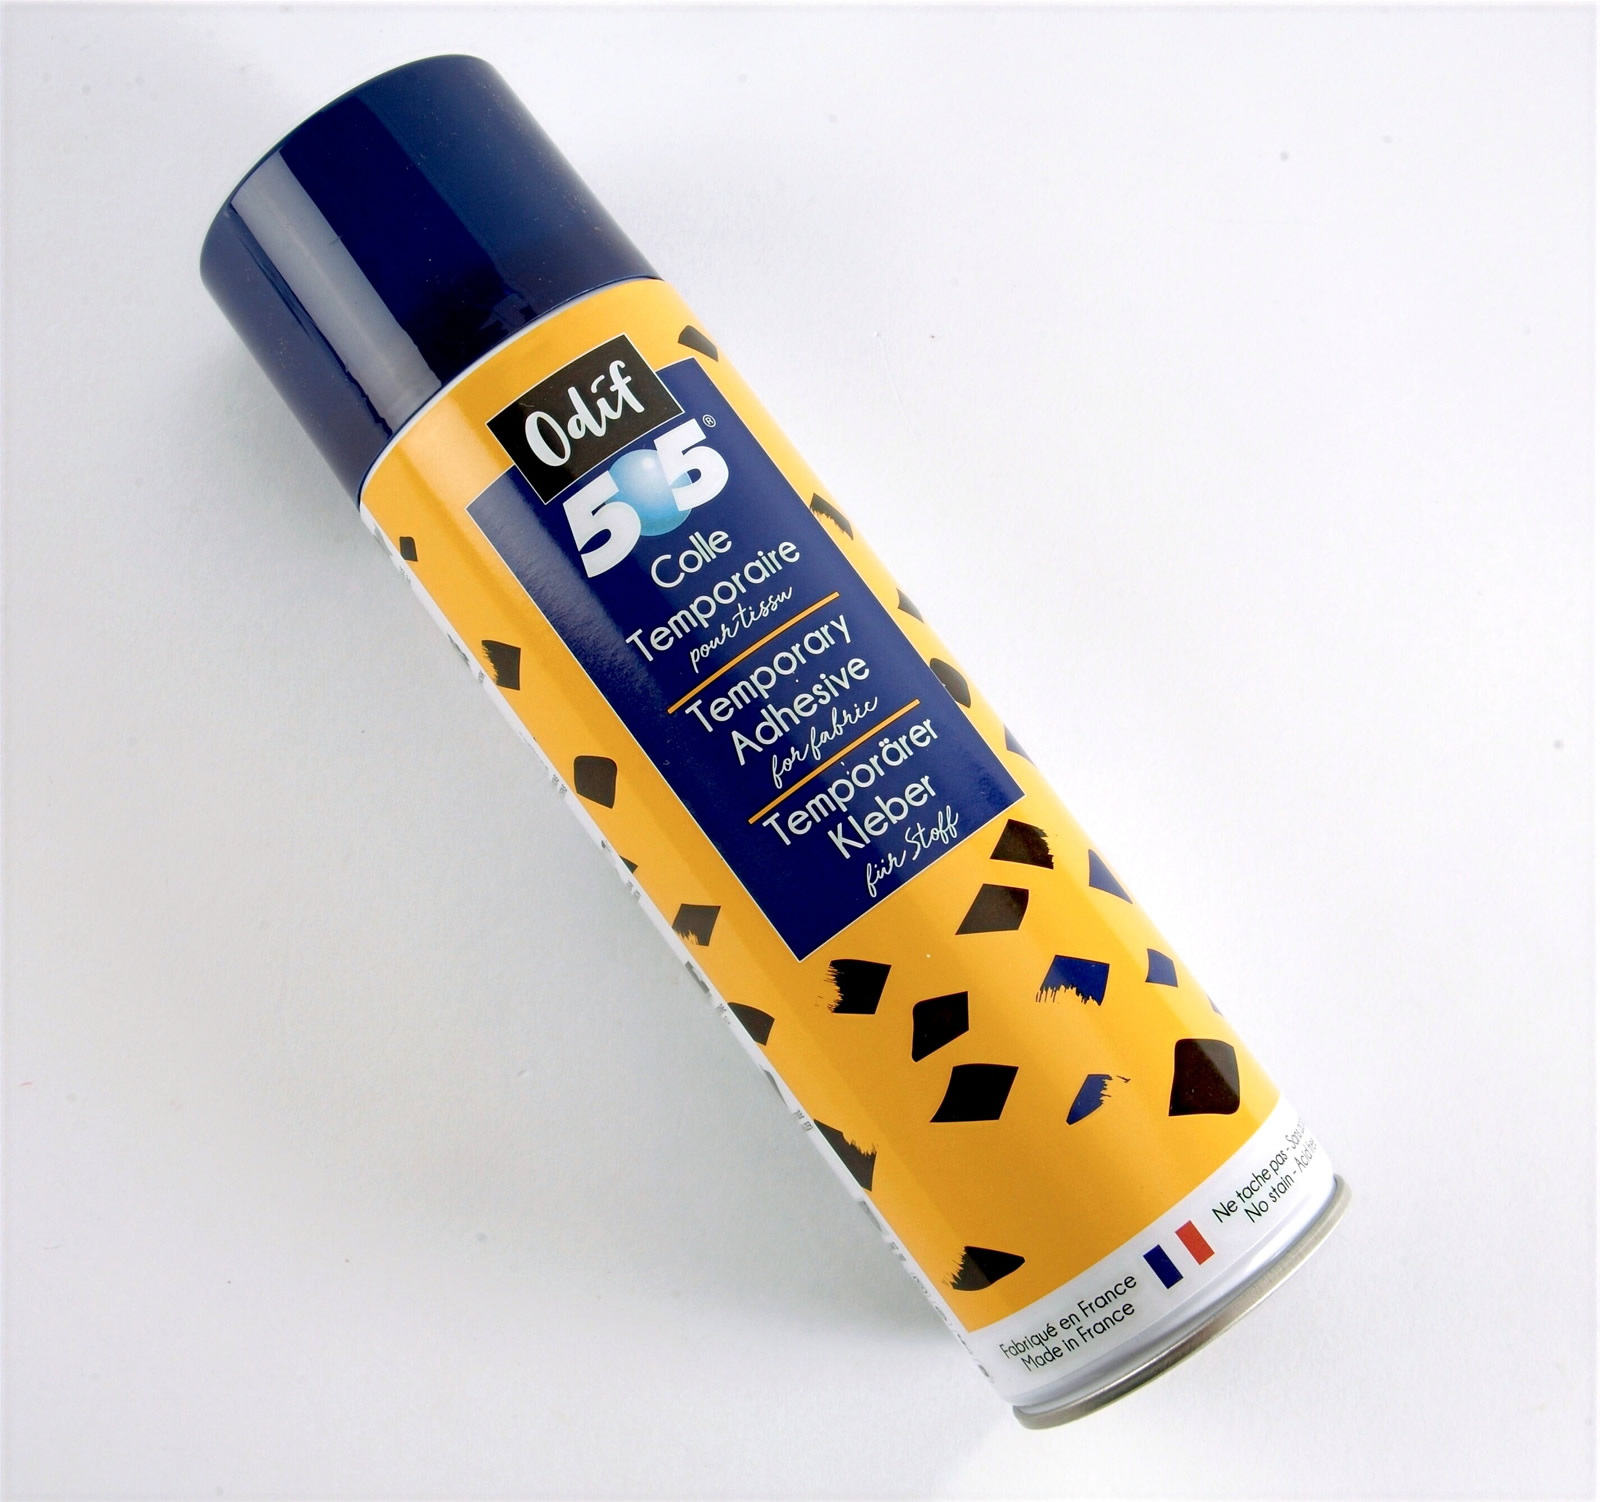 Odif 909 Permanent Fabric Adhesive Spray